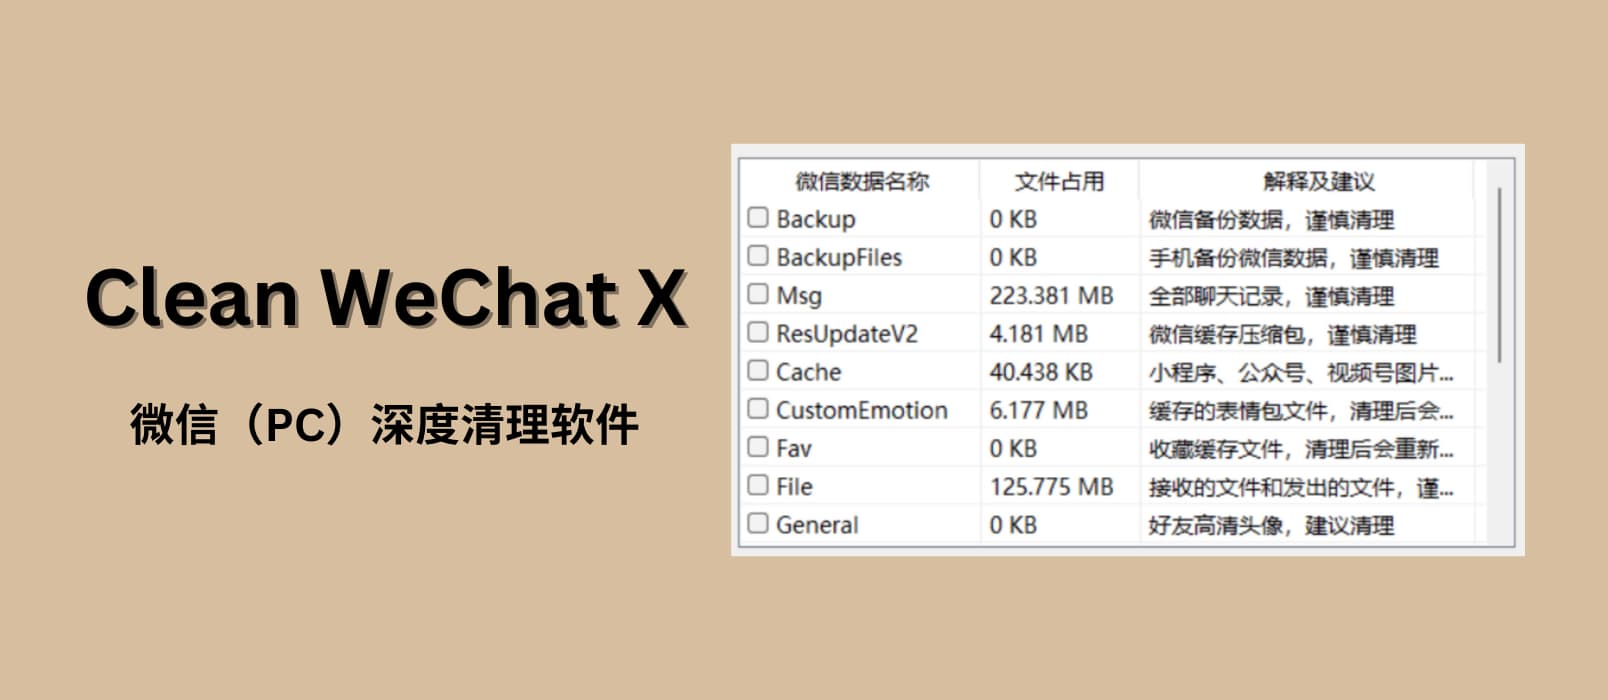 Clean WeChat X - 微信（PC）深度清理软件 1